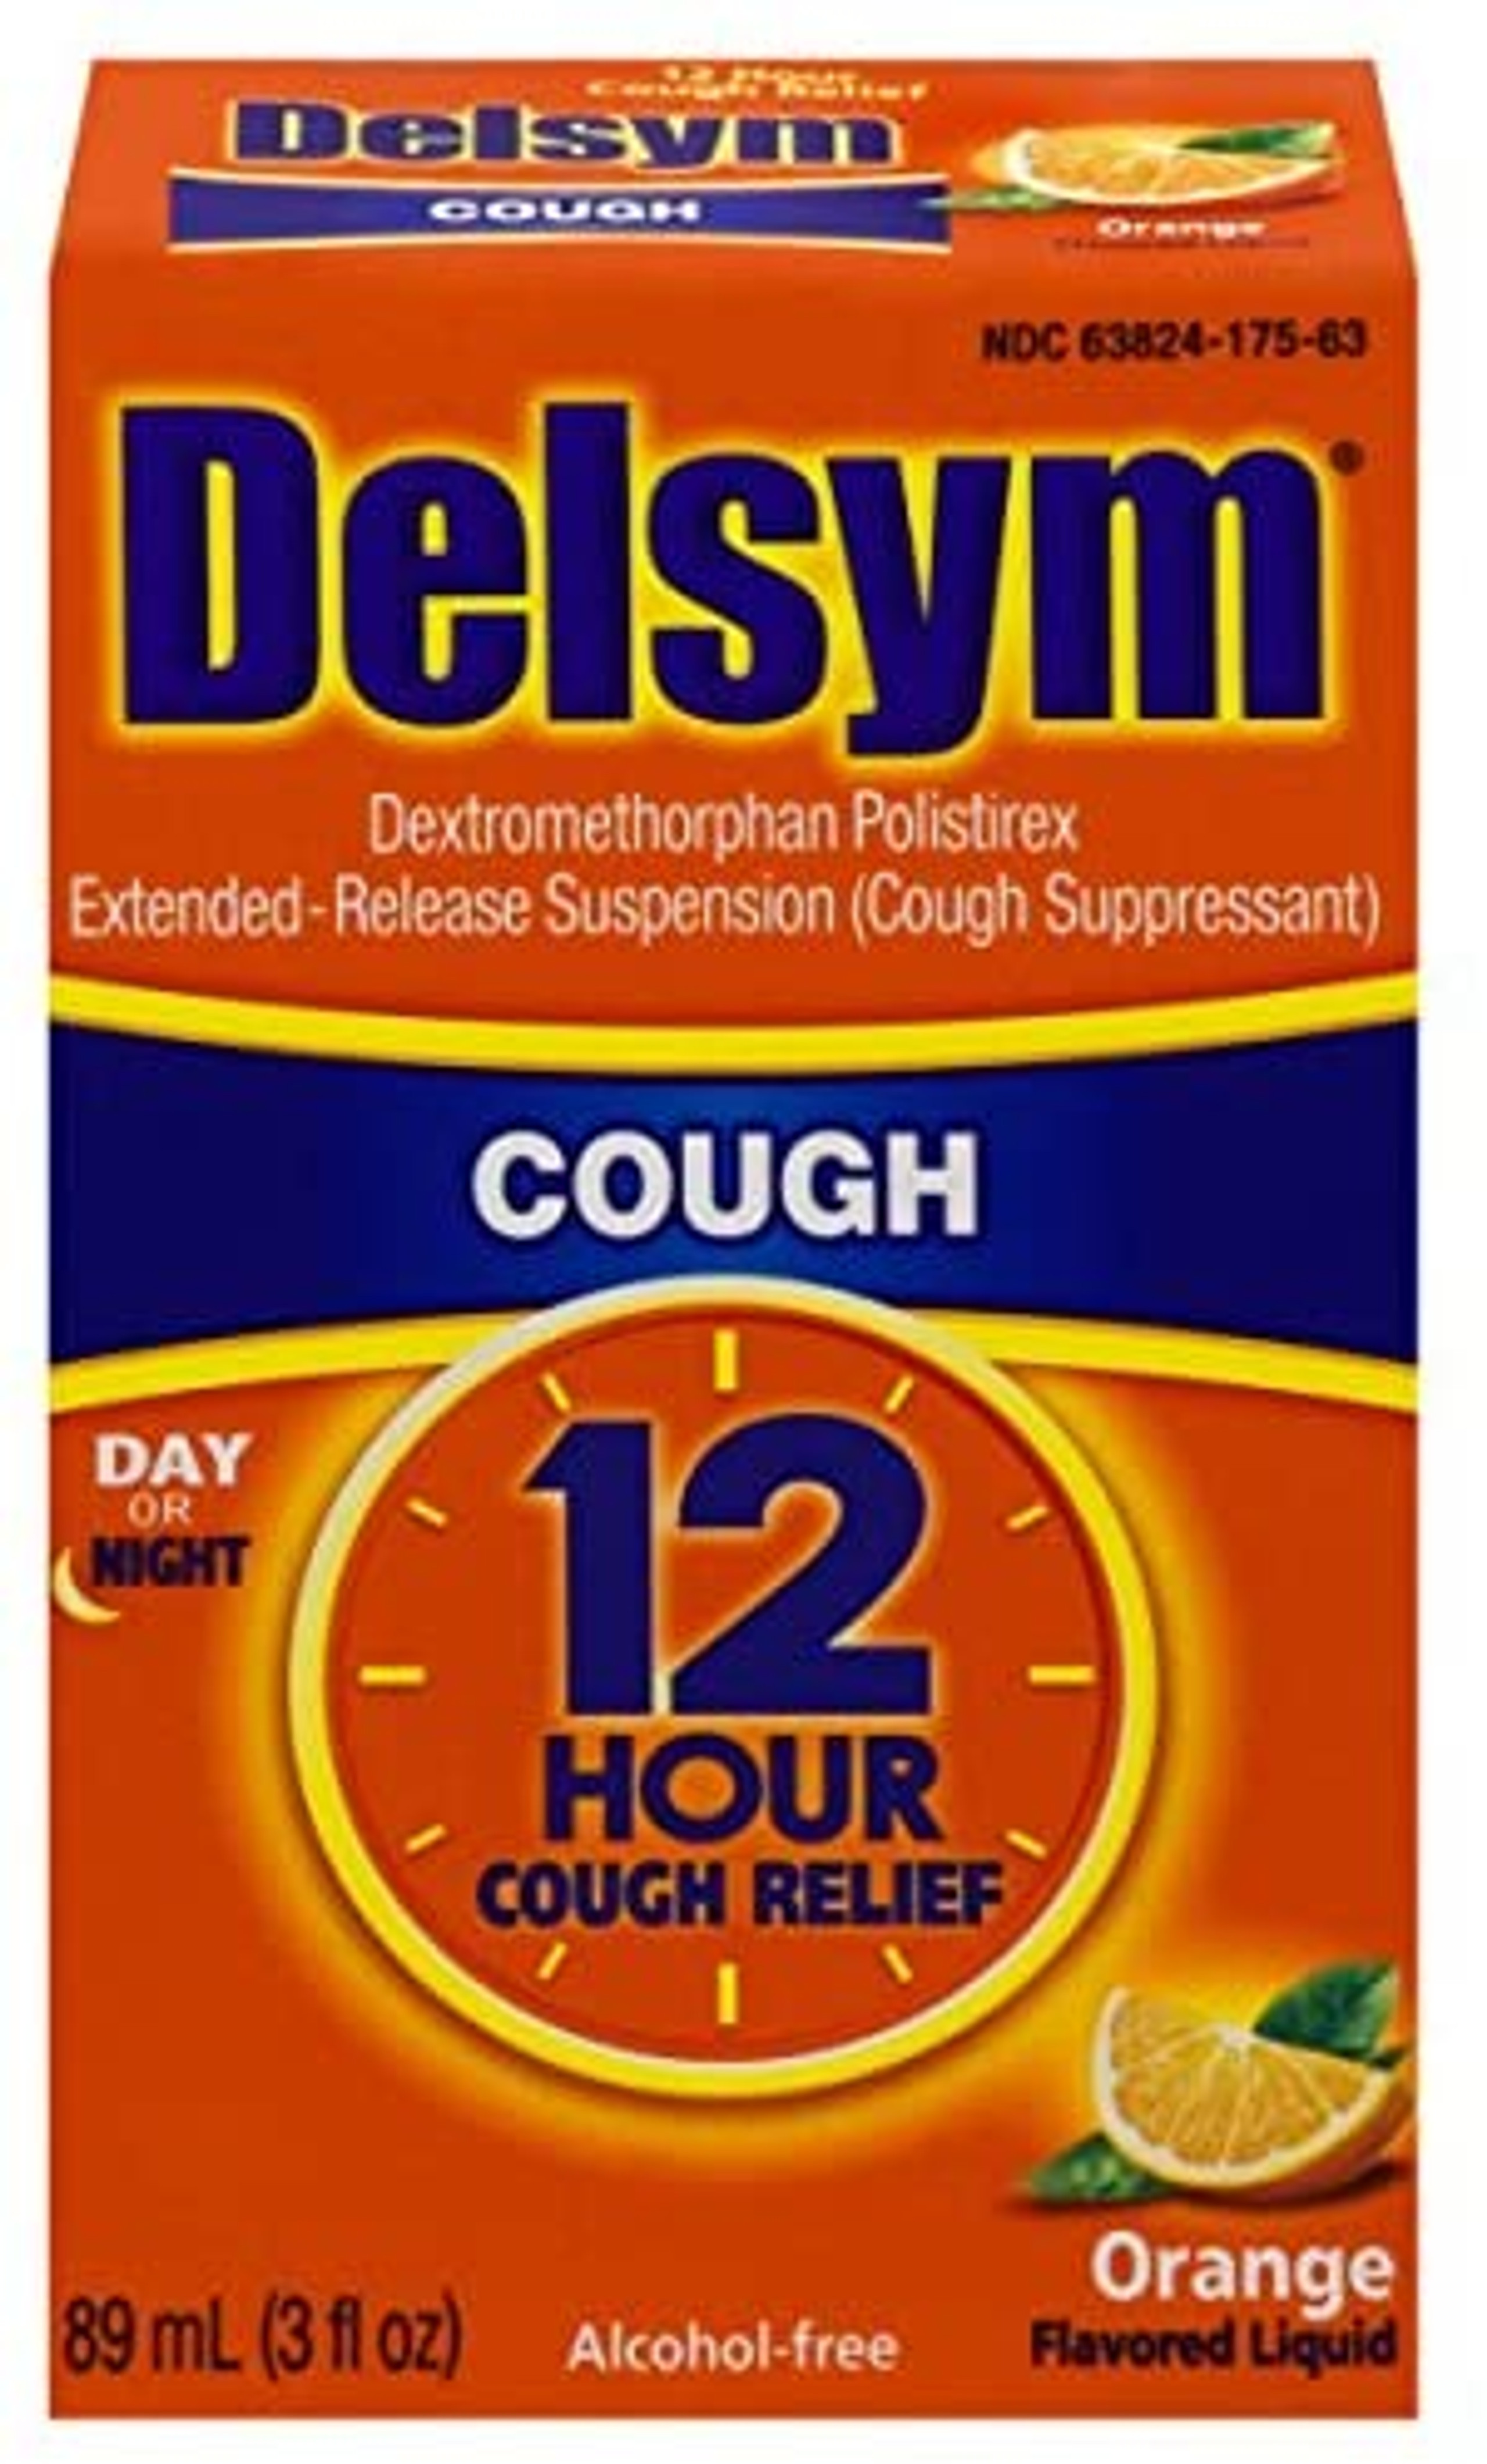 delsym-adult-cough-suppressant-orange-flavored-liquid-3-oz